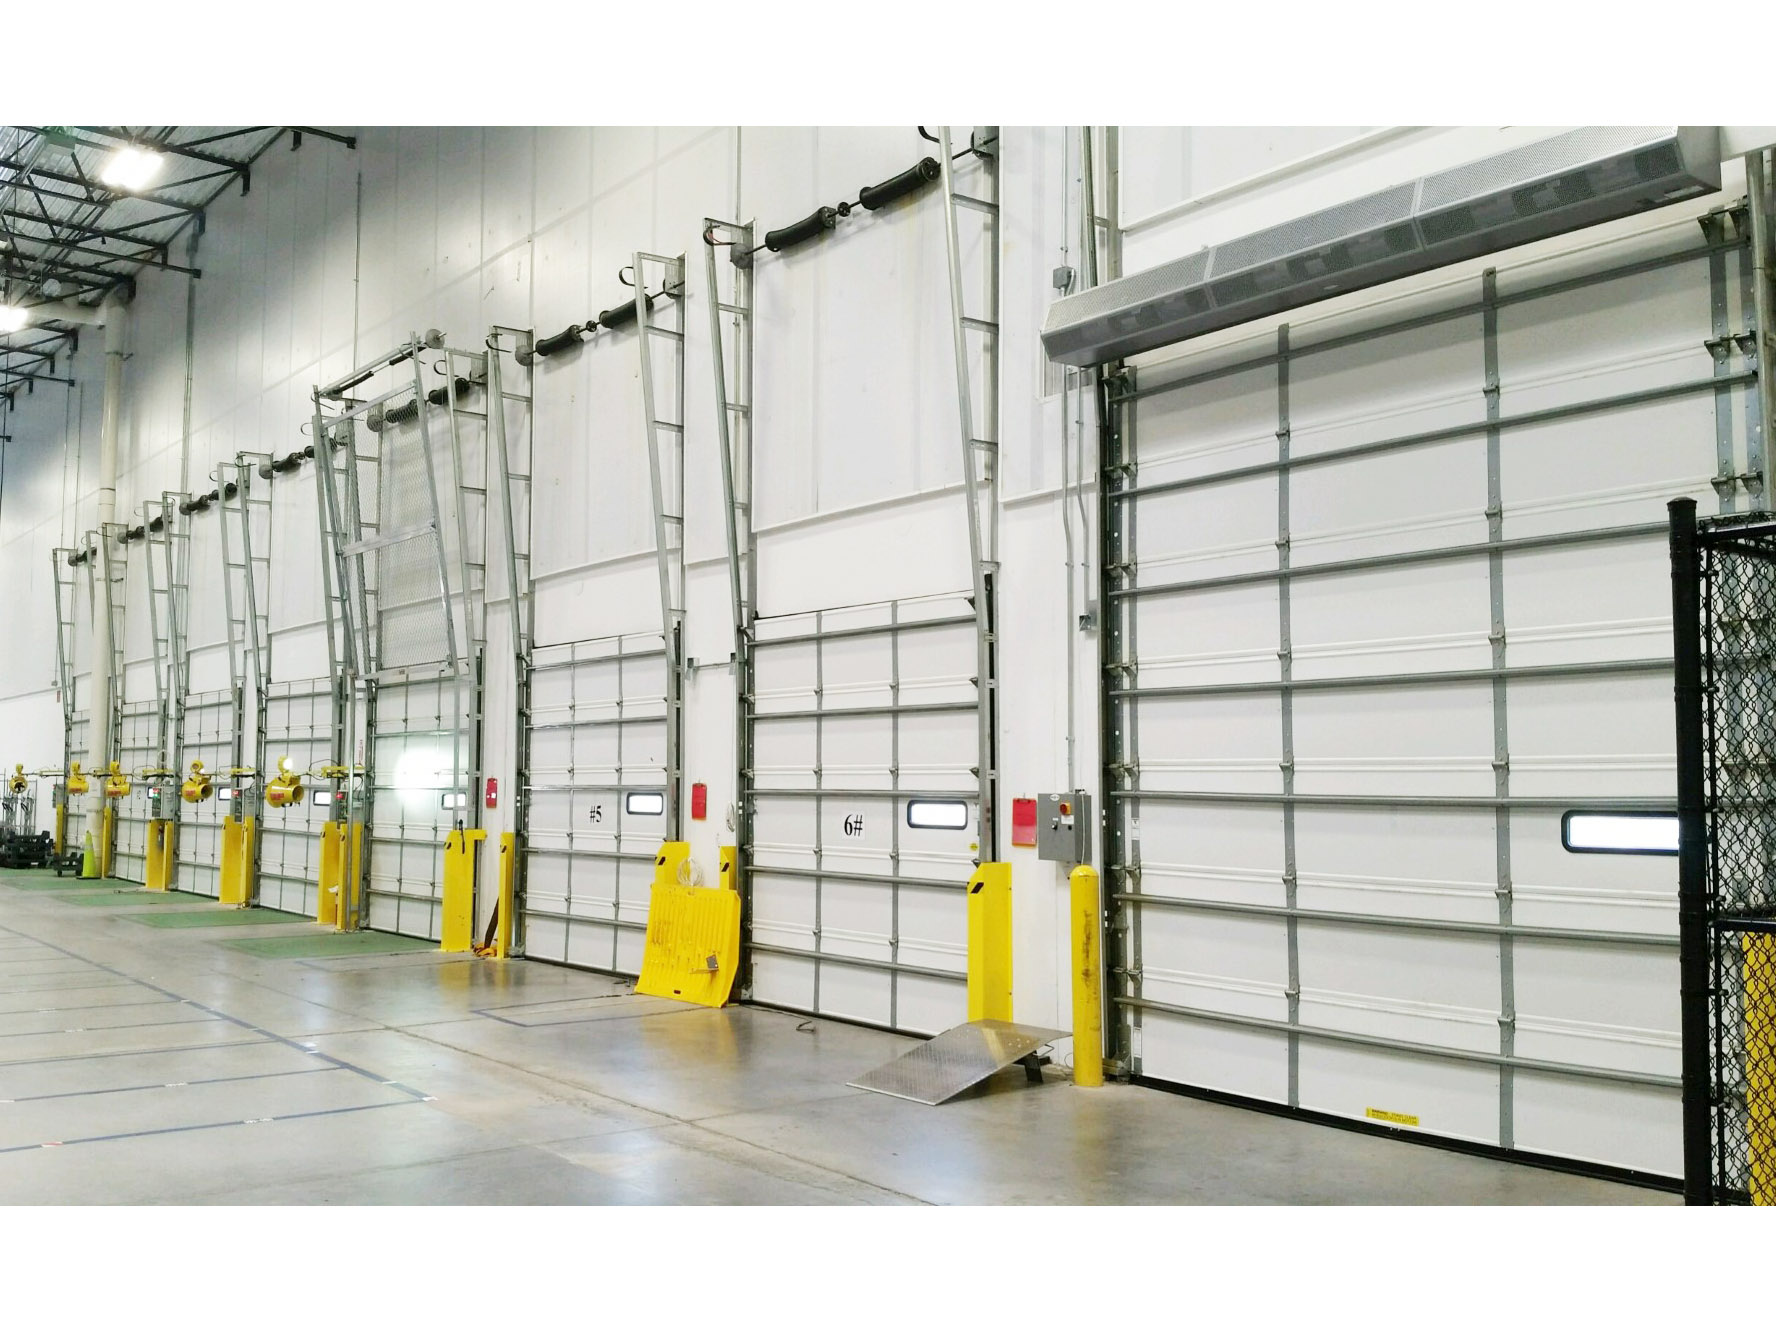 Warehouse sectional doors with view window - Amazon